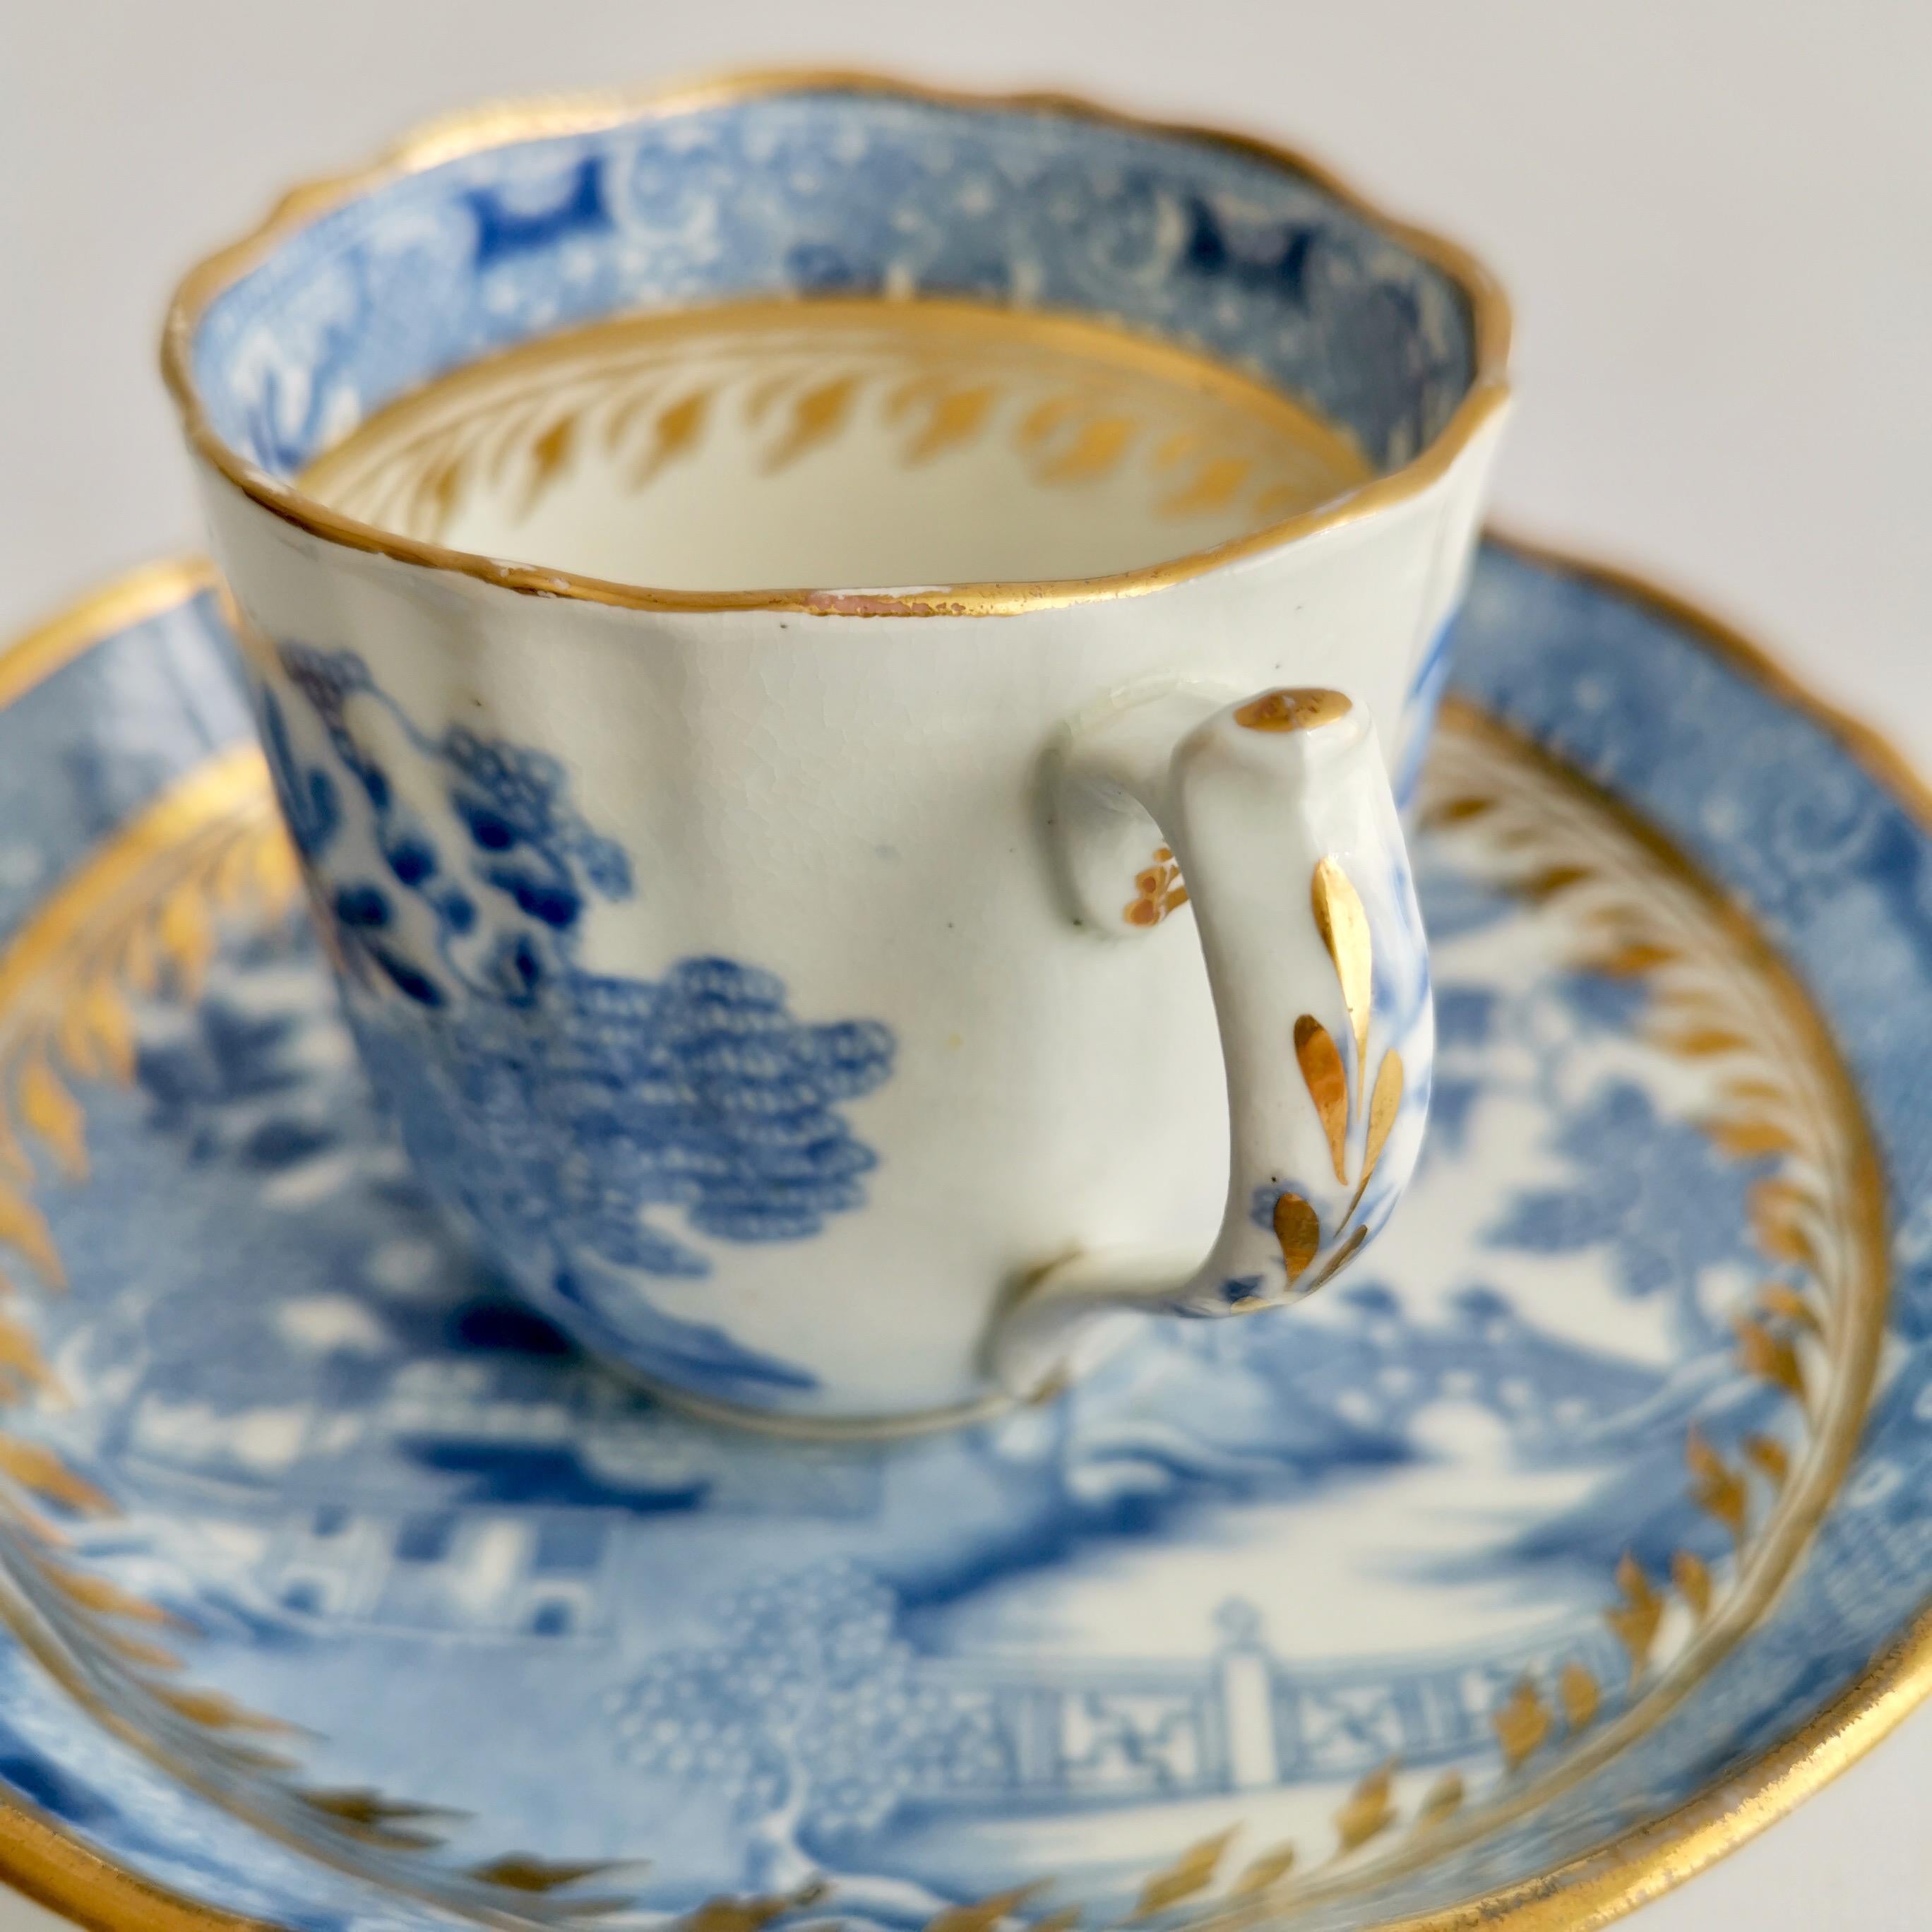 Miles Mason Porcelain Teacup Trio, Pagoda Pattern Blue White Transfer, ca 1810 5